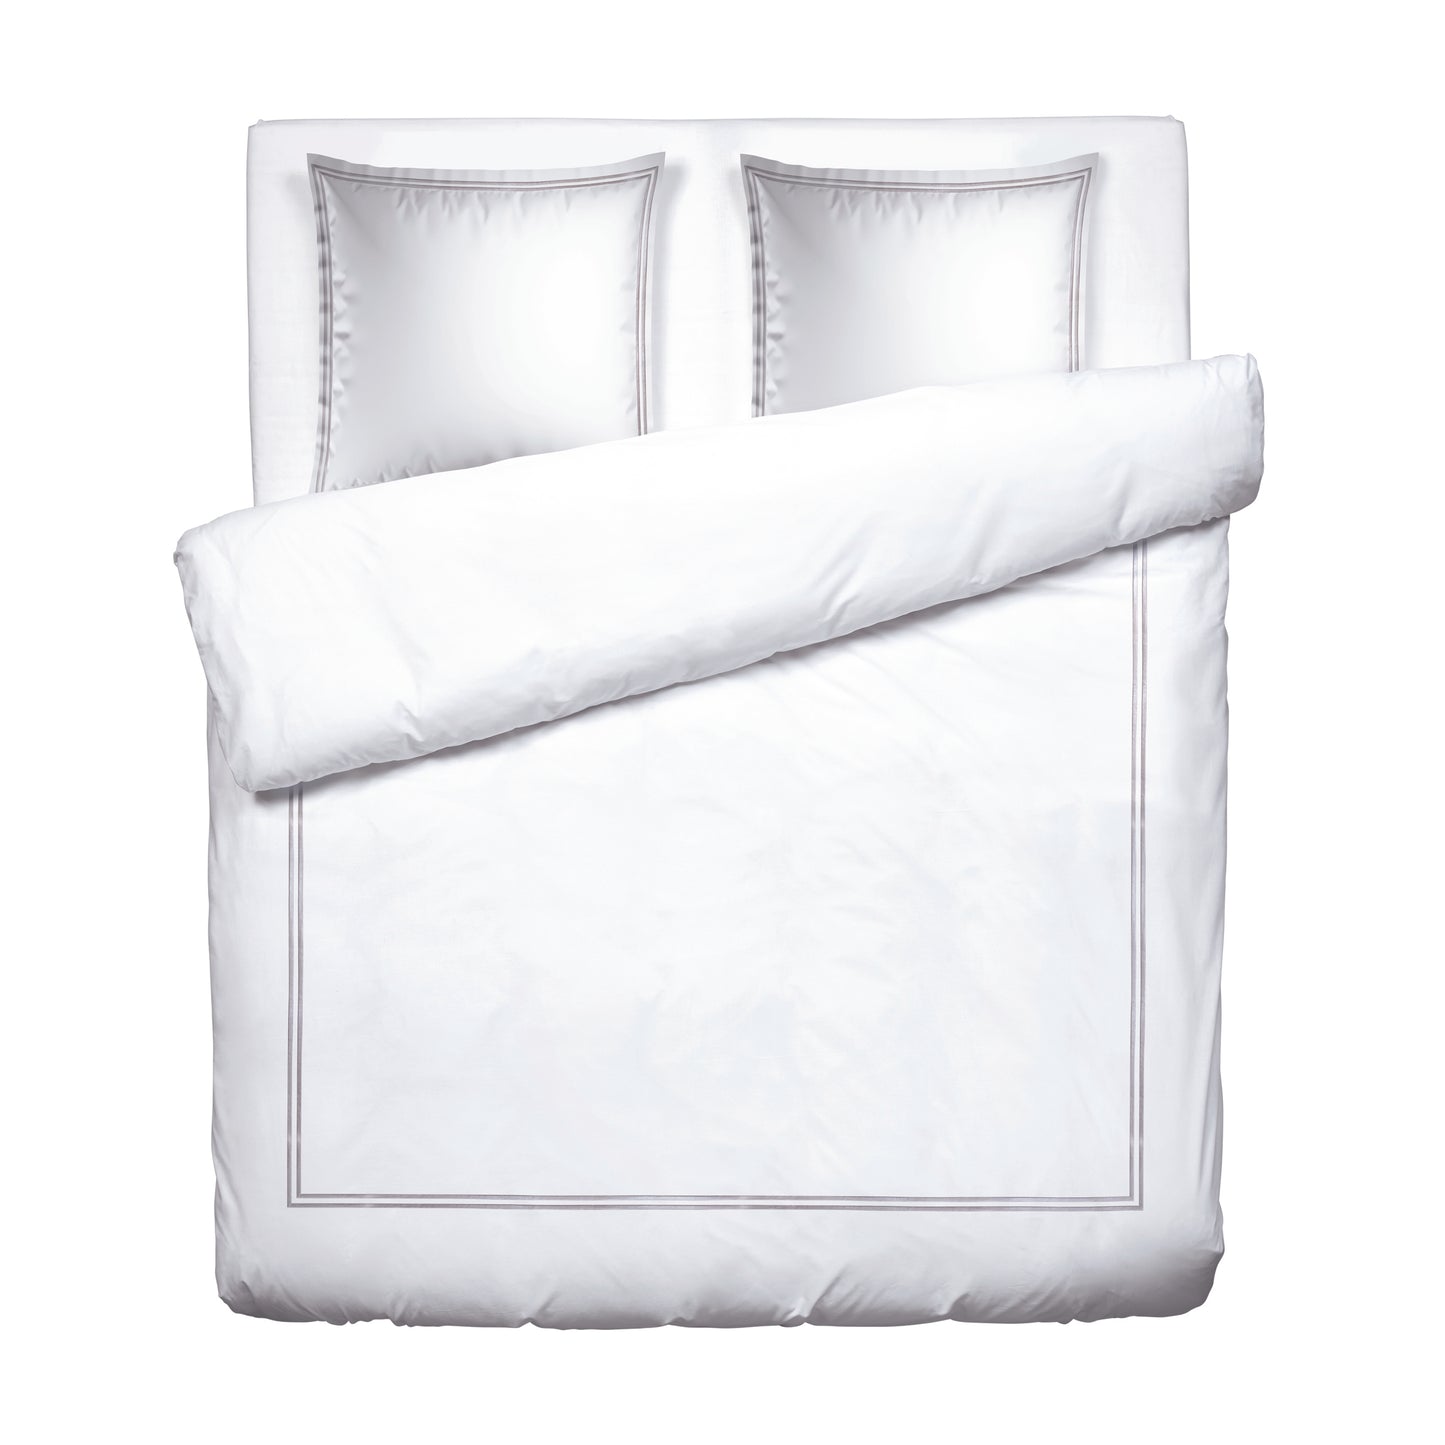 Duvet cover + pillowcase(s) cotton satin - Saint-Tropez White / Silver